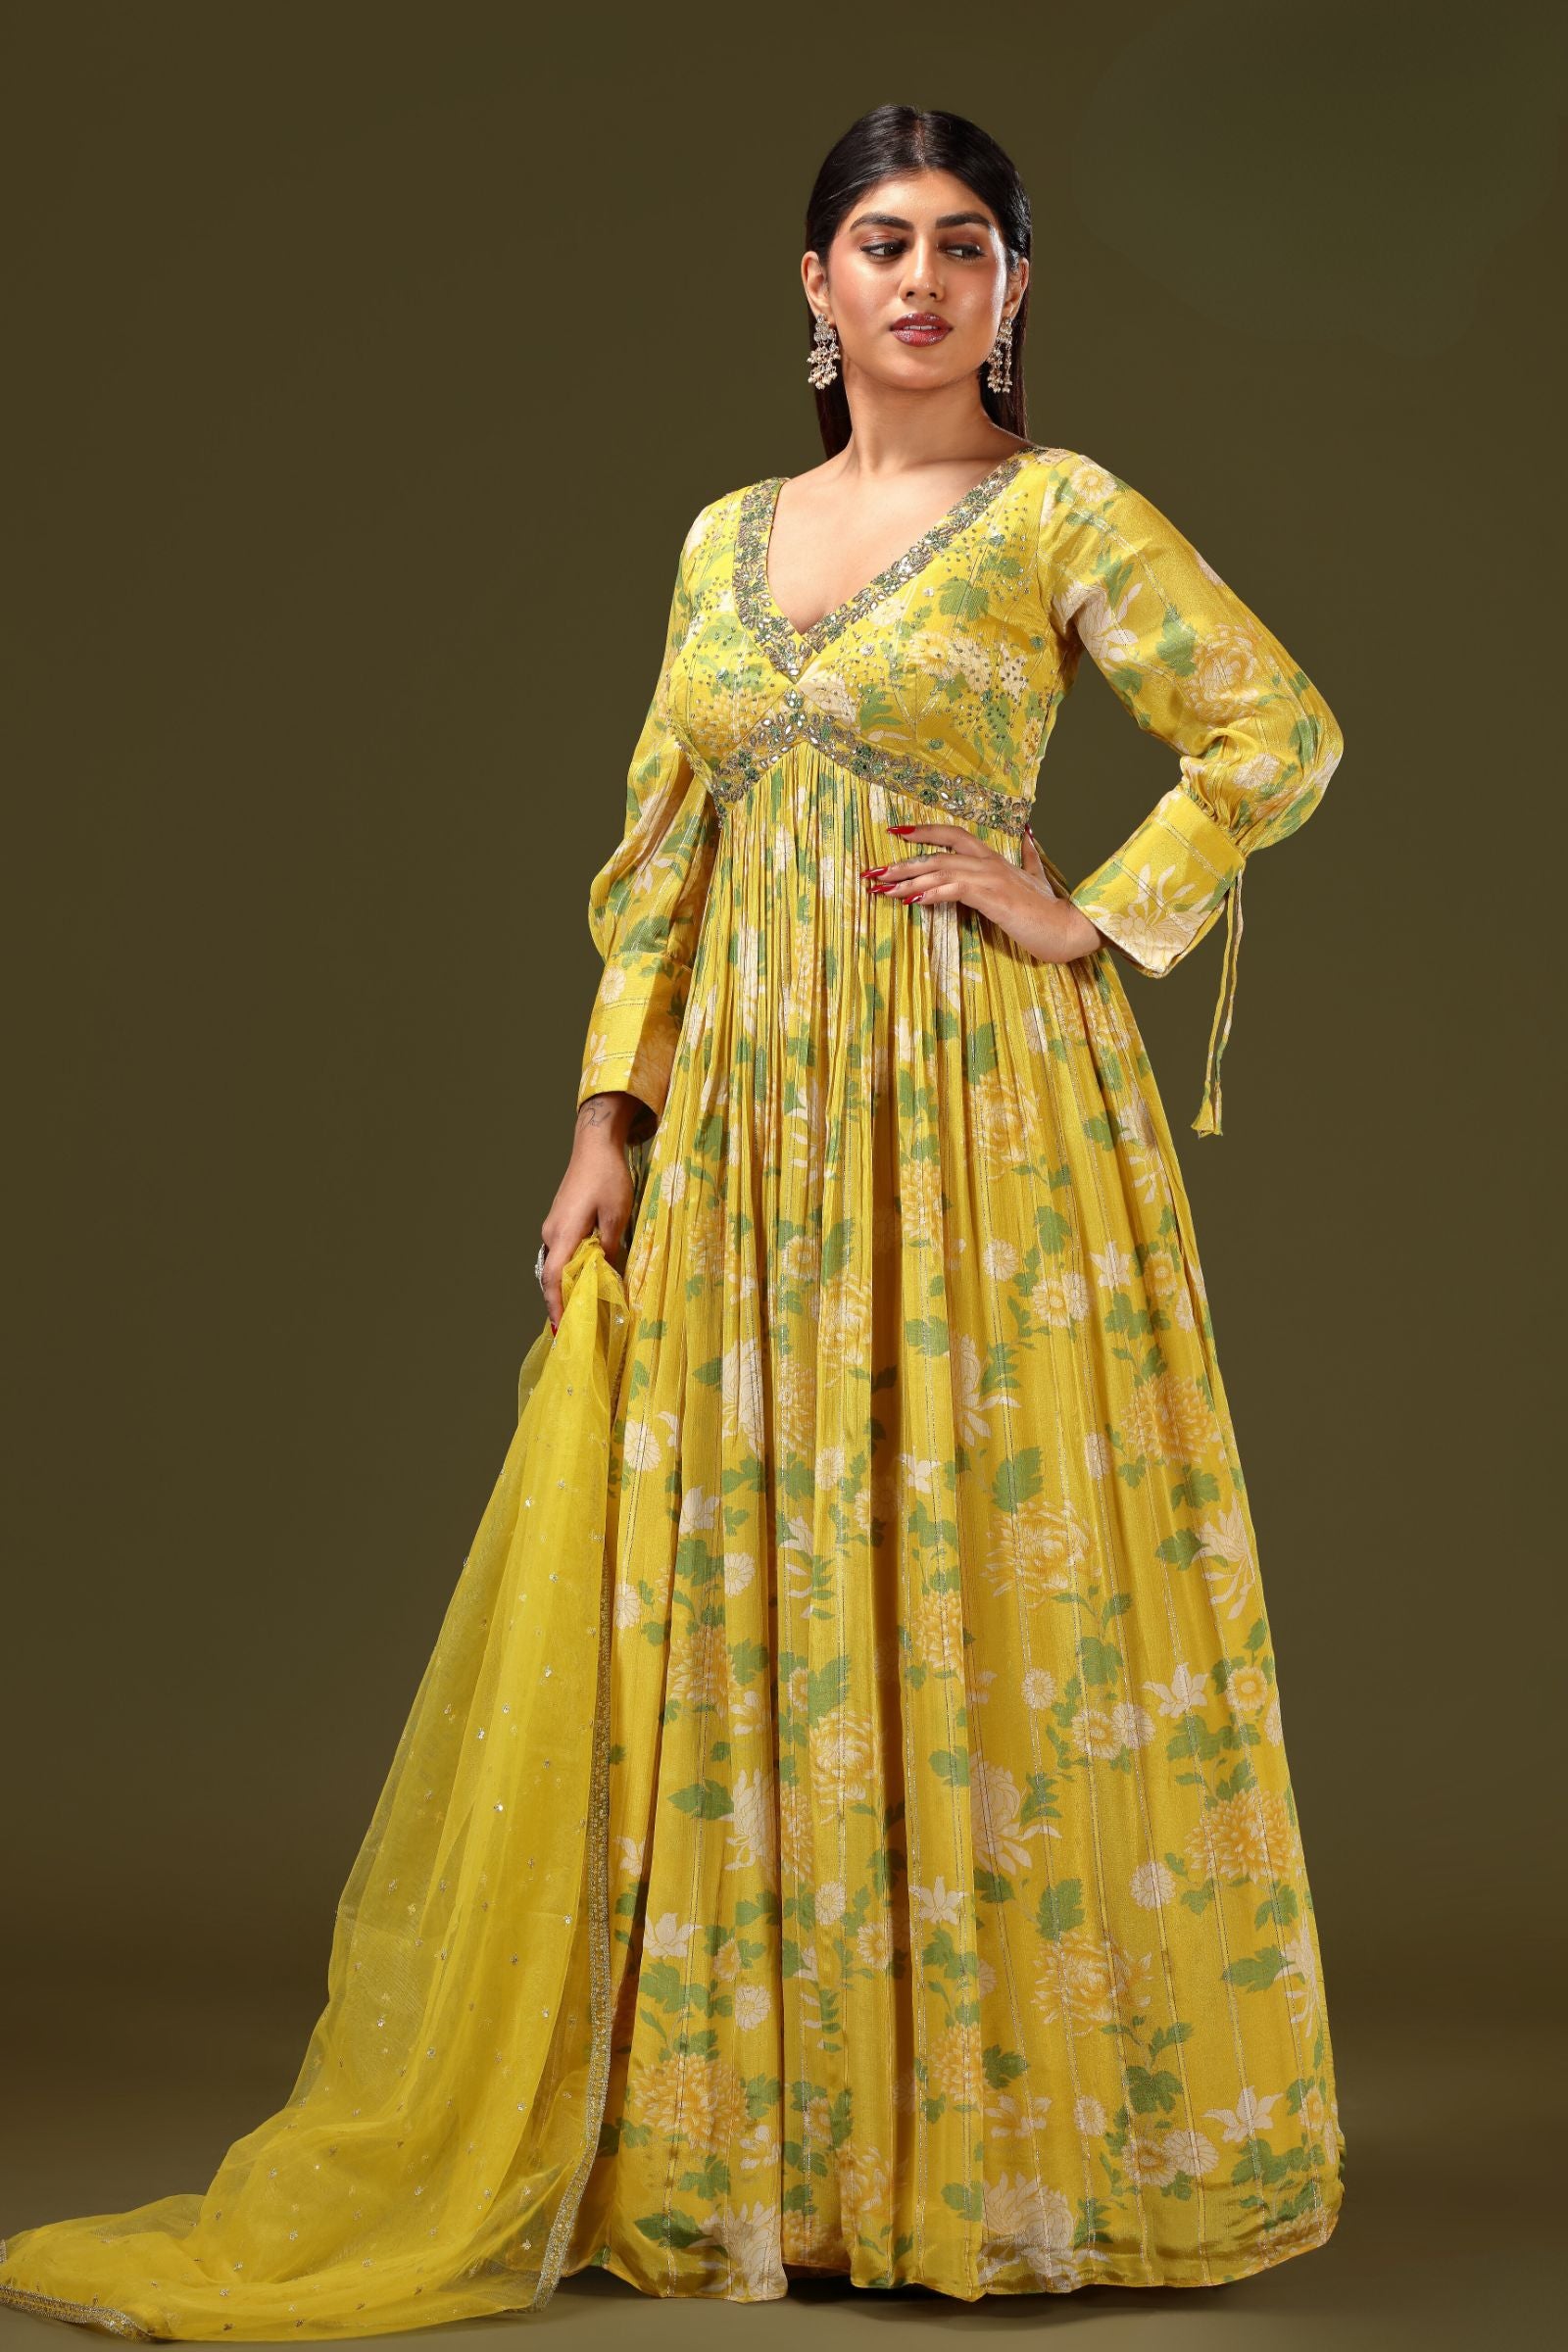 Colorful Anarkali Designer Salwar Kameez Gown Type Dupatta Suit Ready Made  Indian Festival Wear Embroidery Work Ethnic Women Stylish Dresses - Etsy |  Long anarkali gown, Anarkali gown, Indian wedding wear